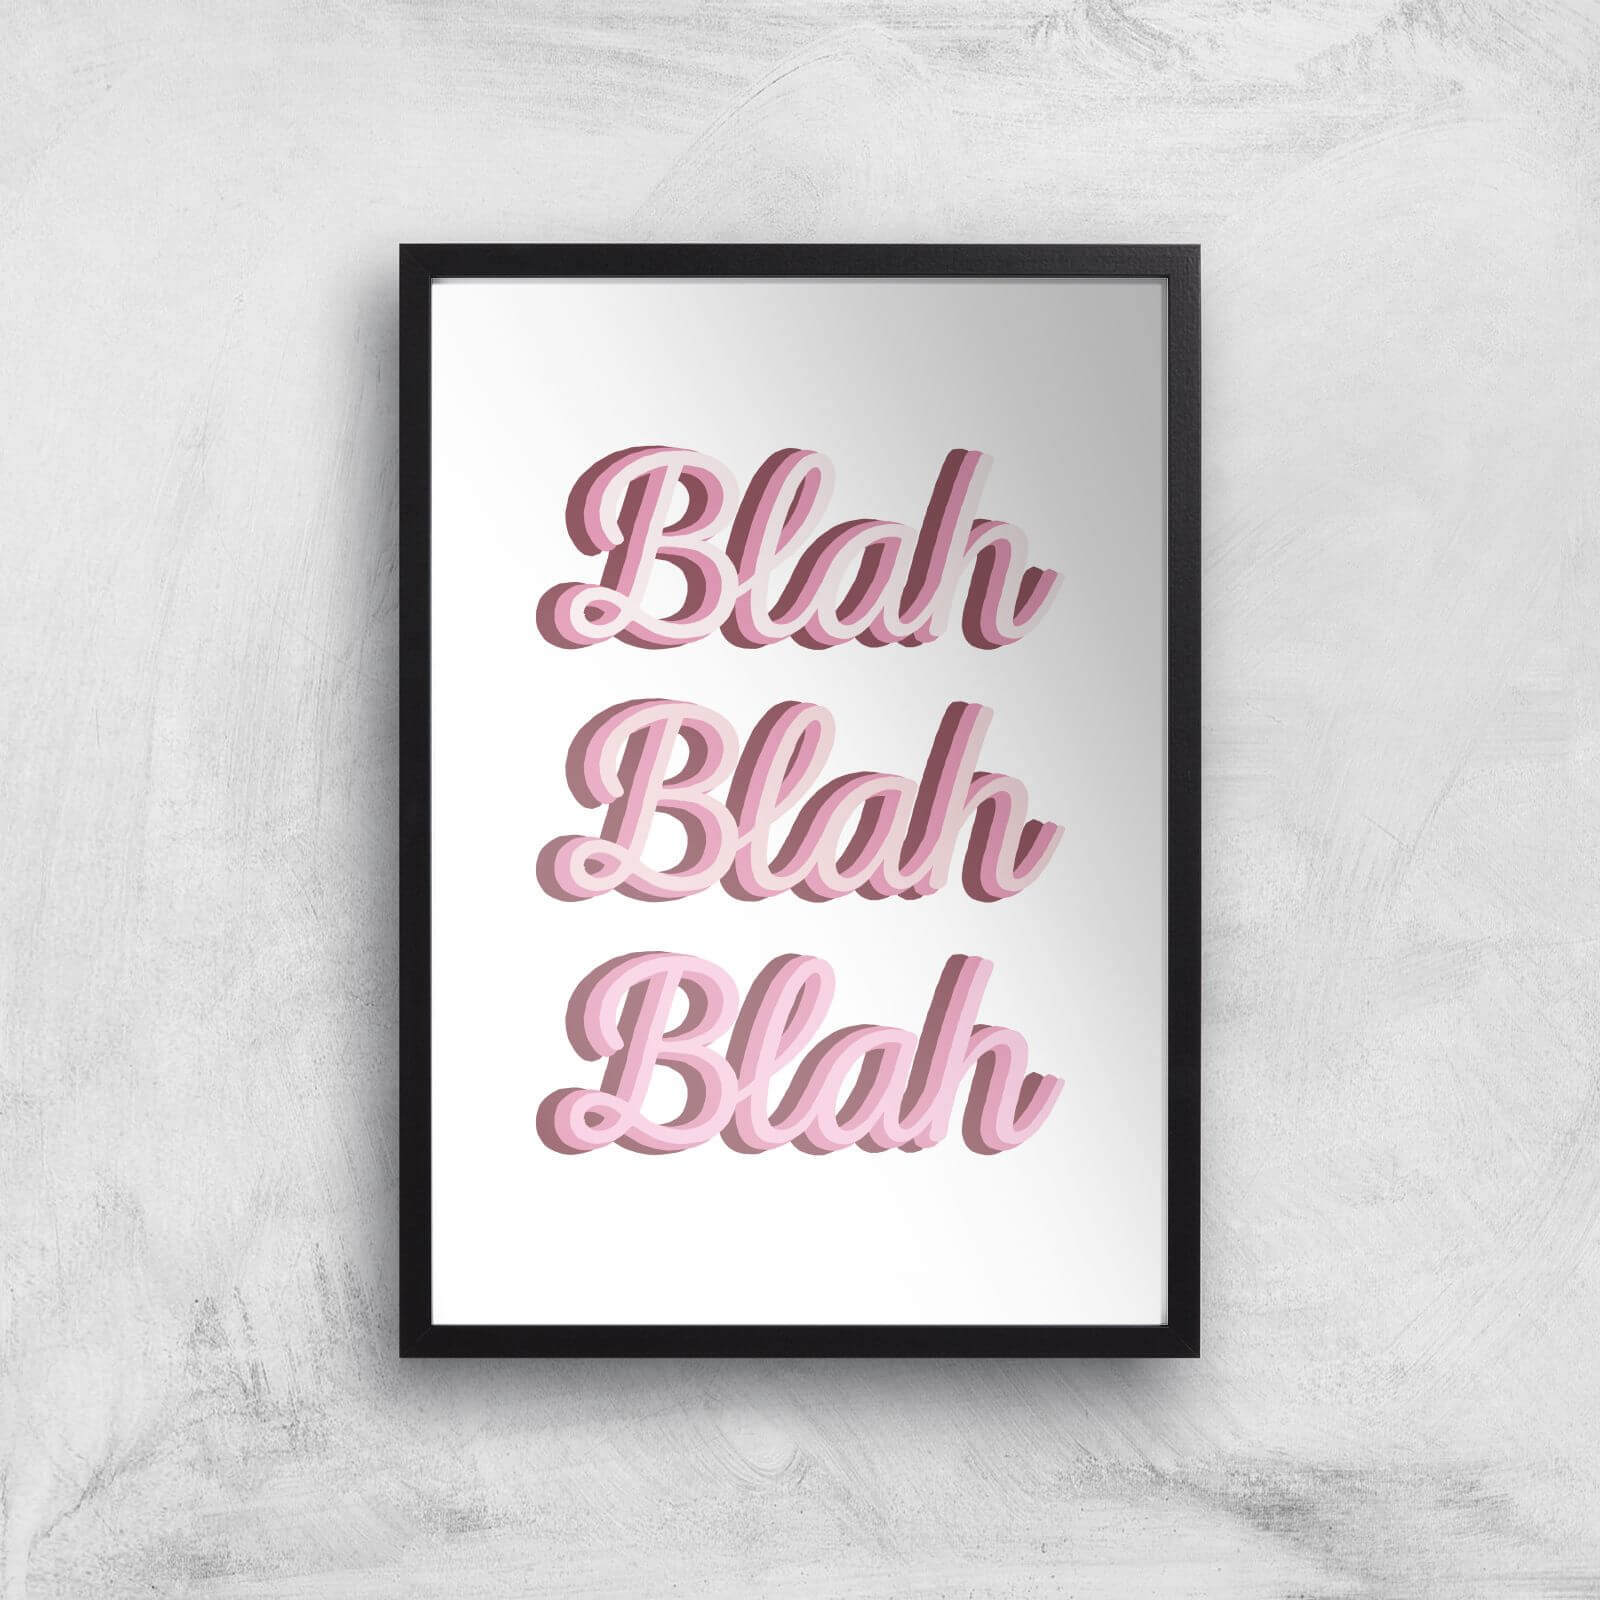 Blah Blah Blah Giclée Art Print - A2 - Black Frame